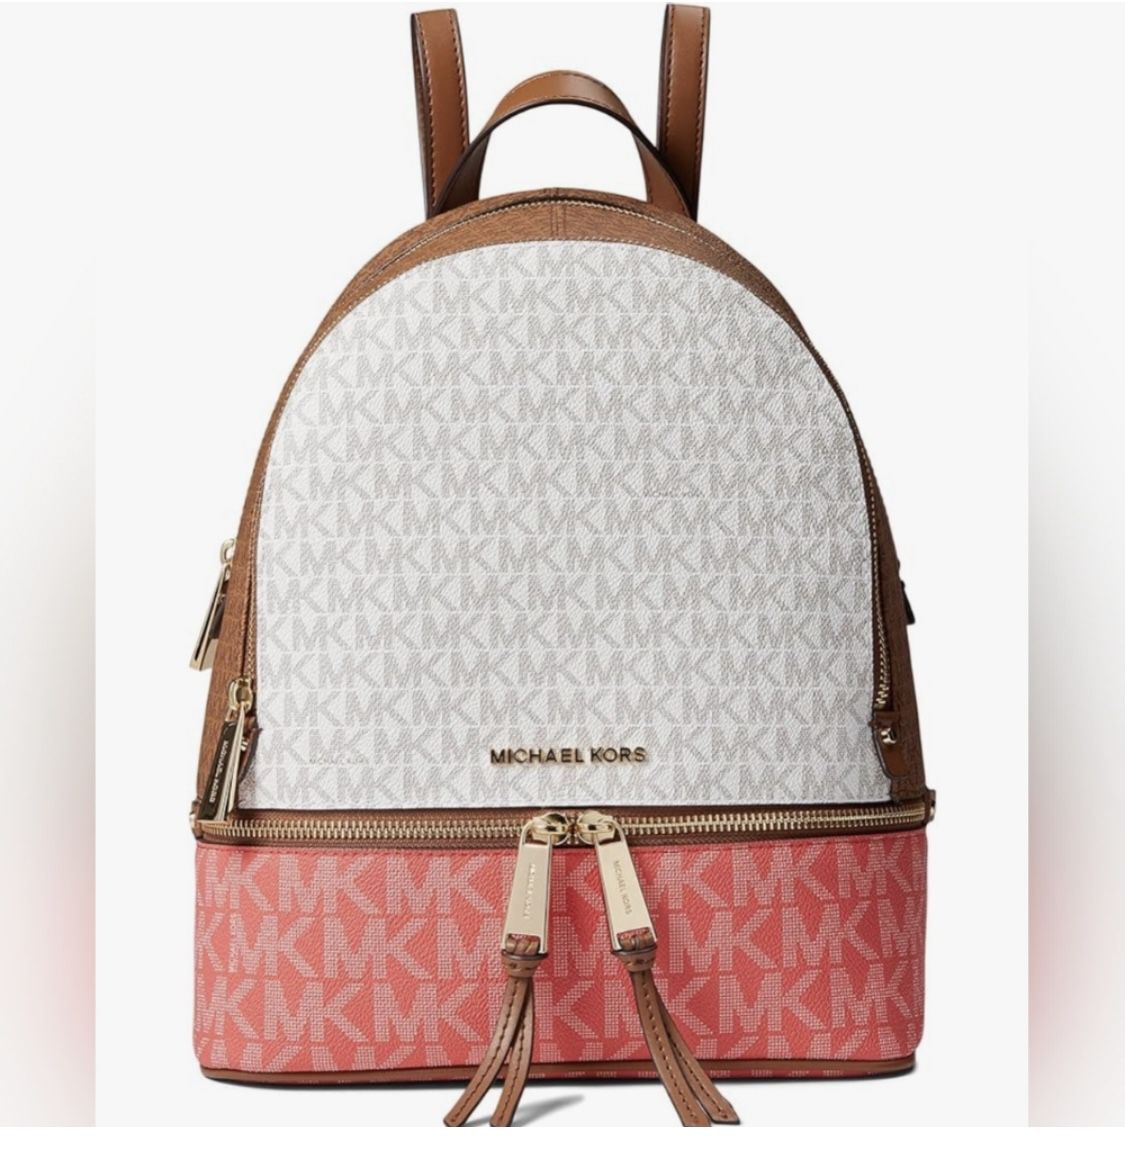 Michael Kors Rhea Zip Medium Backpack Coral Multi NWOT